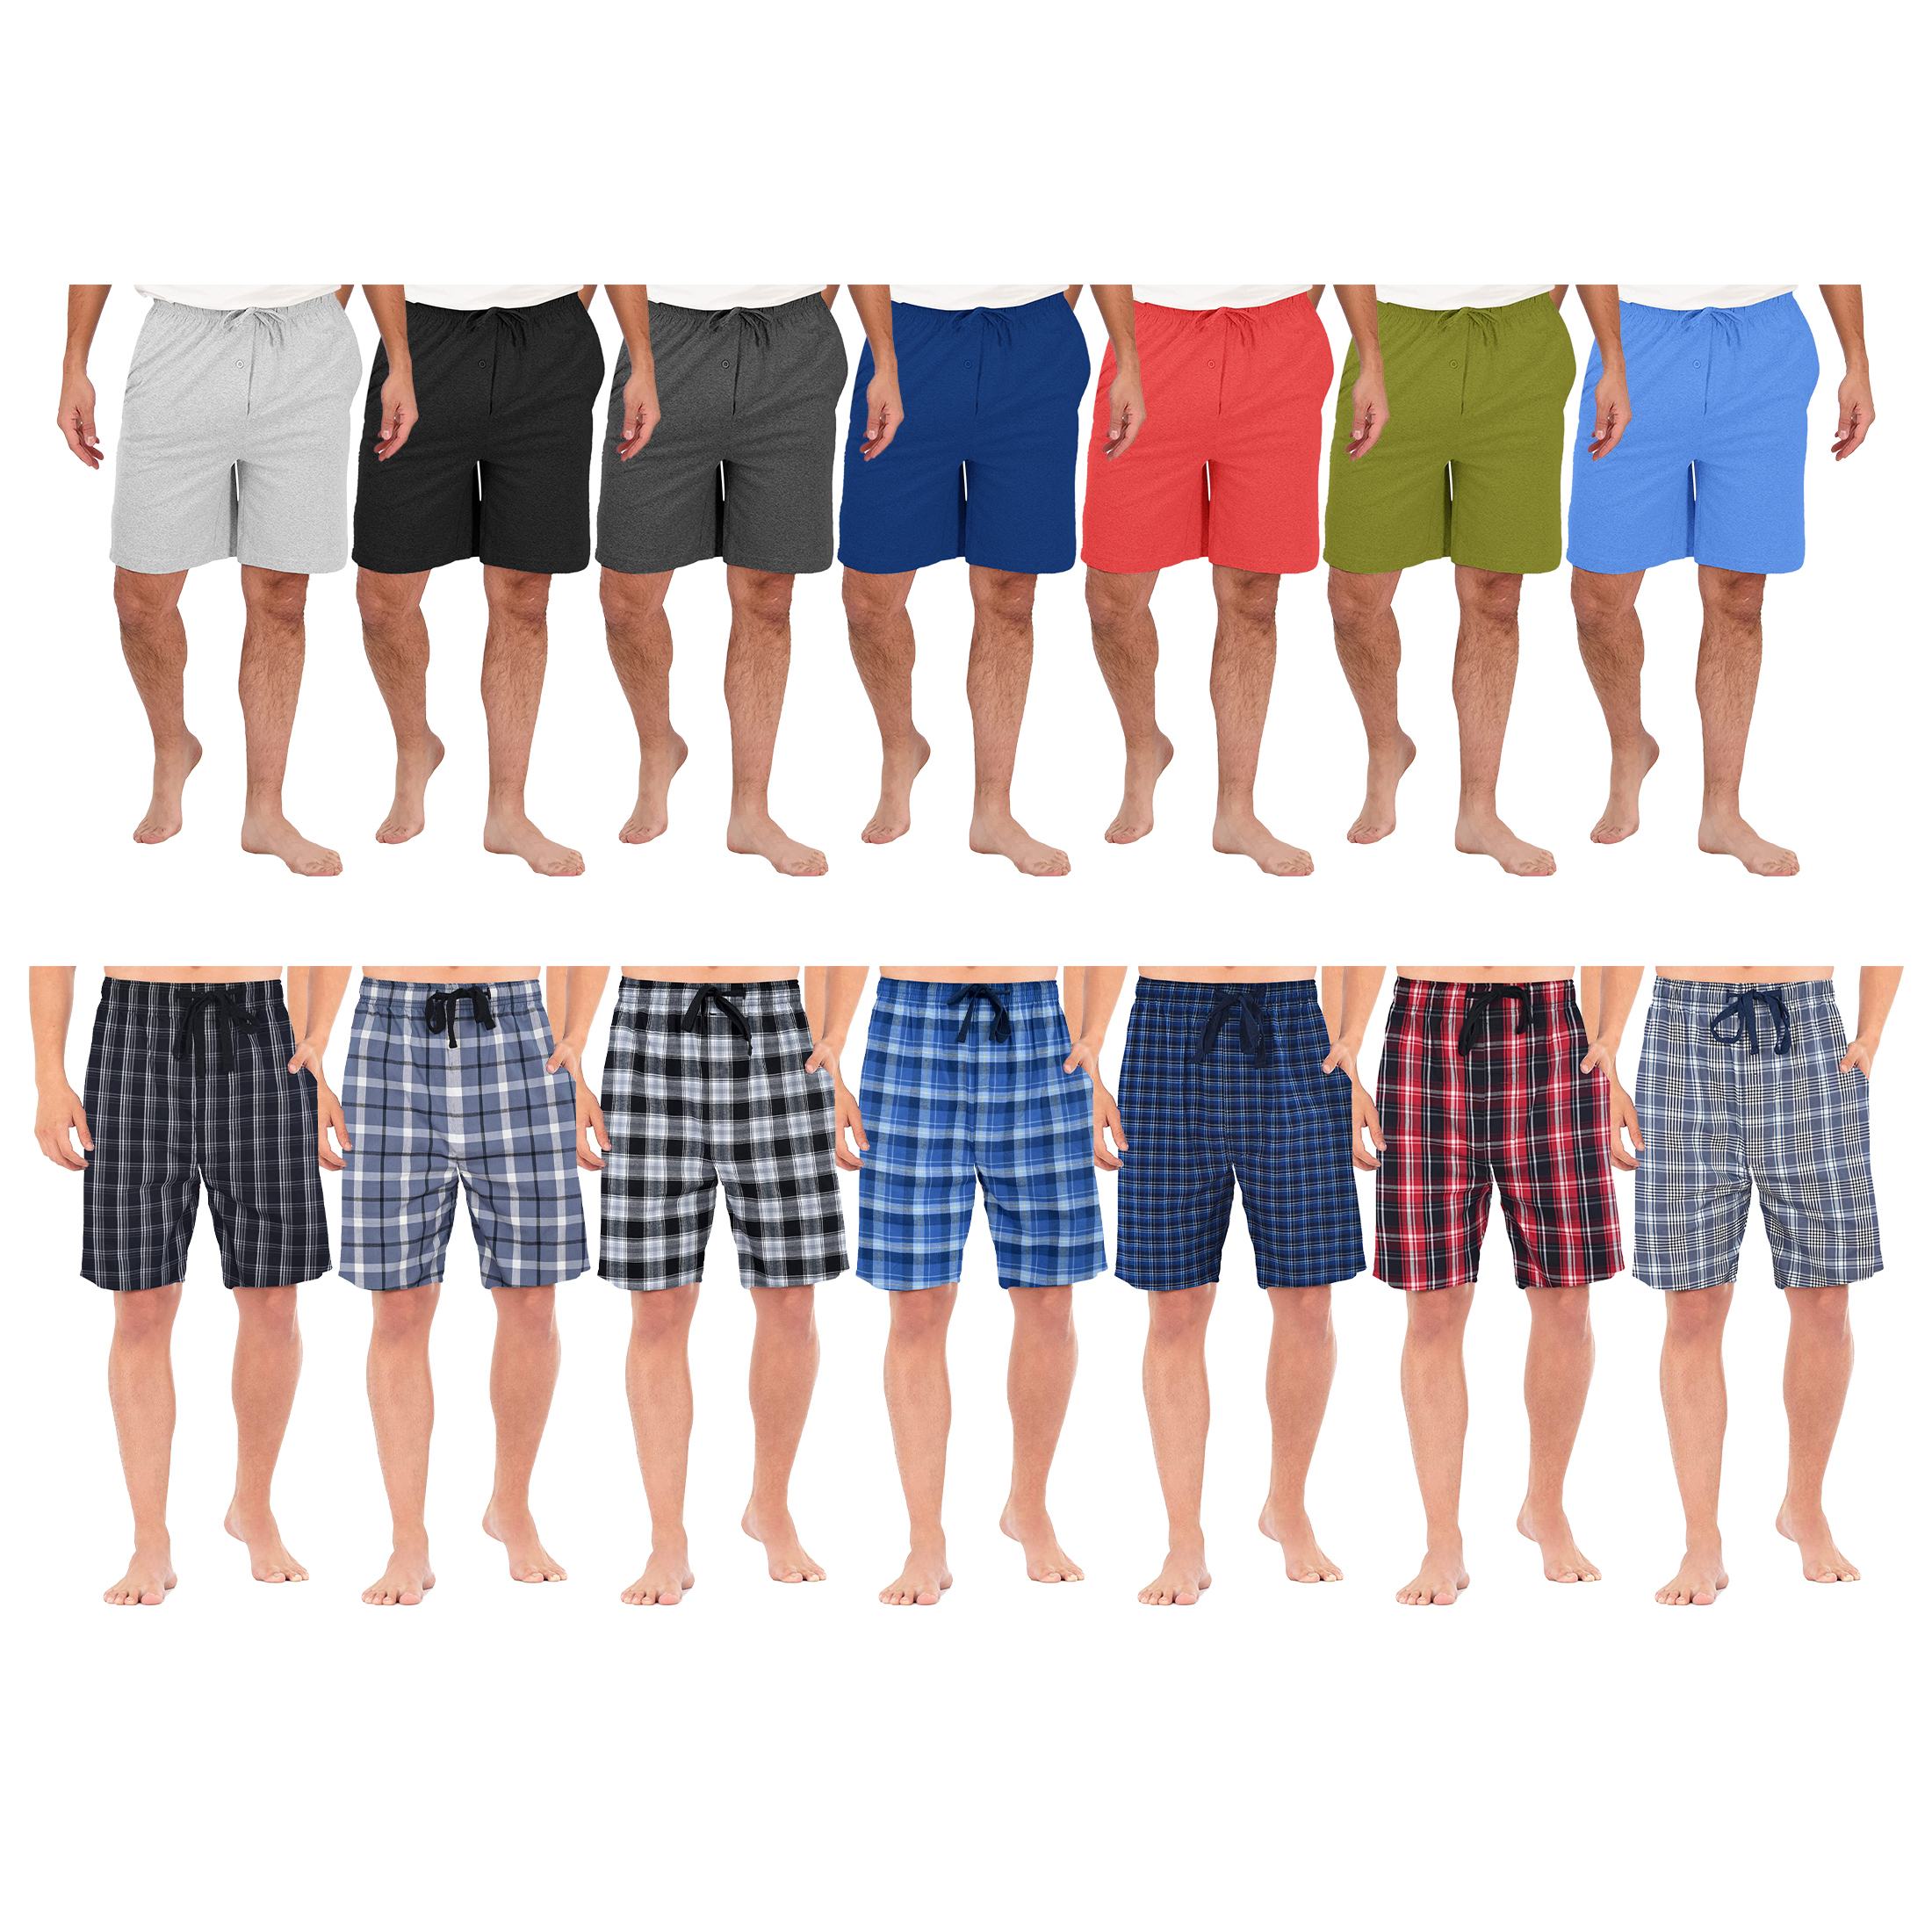 Multi-Pack: Men's Ultra-Soft Jersey Knit Sleep Lounge Pajama Shorts For Sleepwear - Solid & Plaid, 3 Pack, Medium